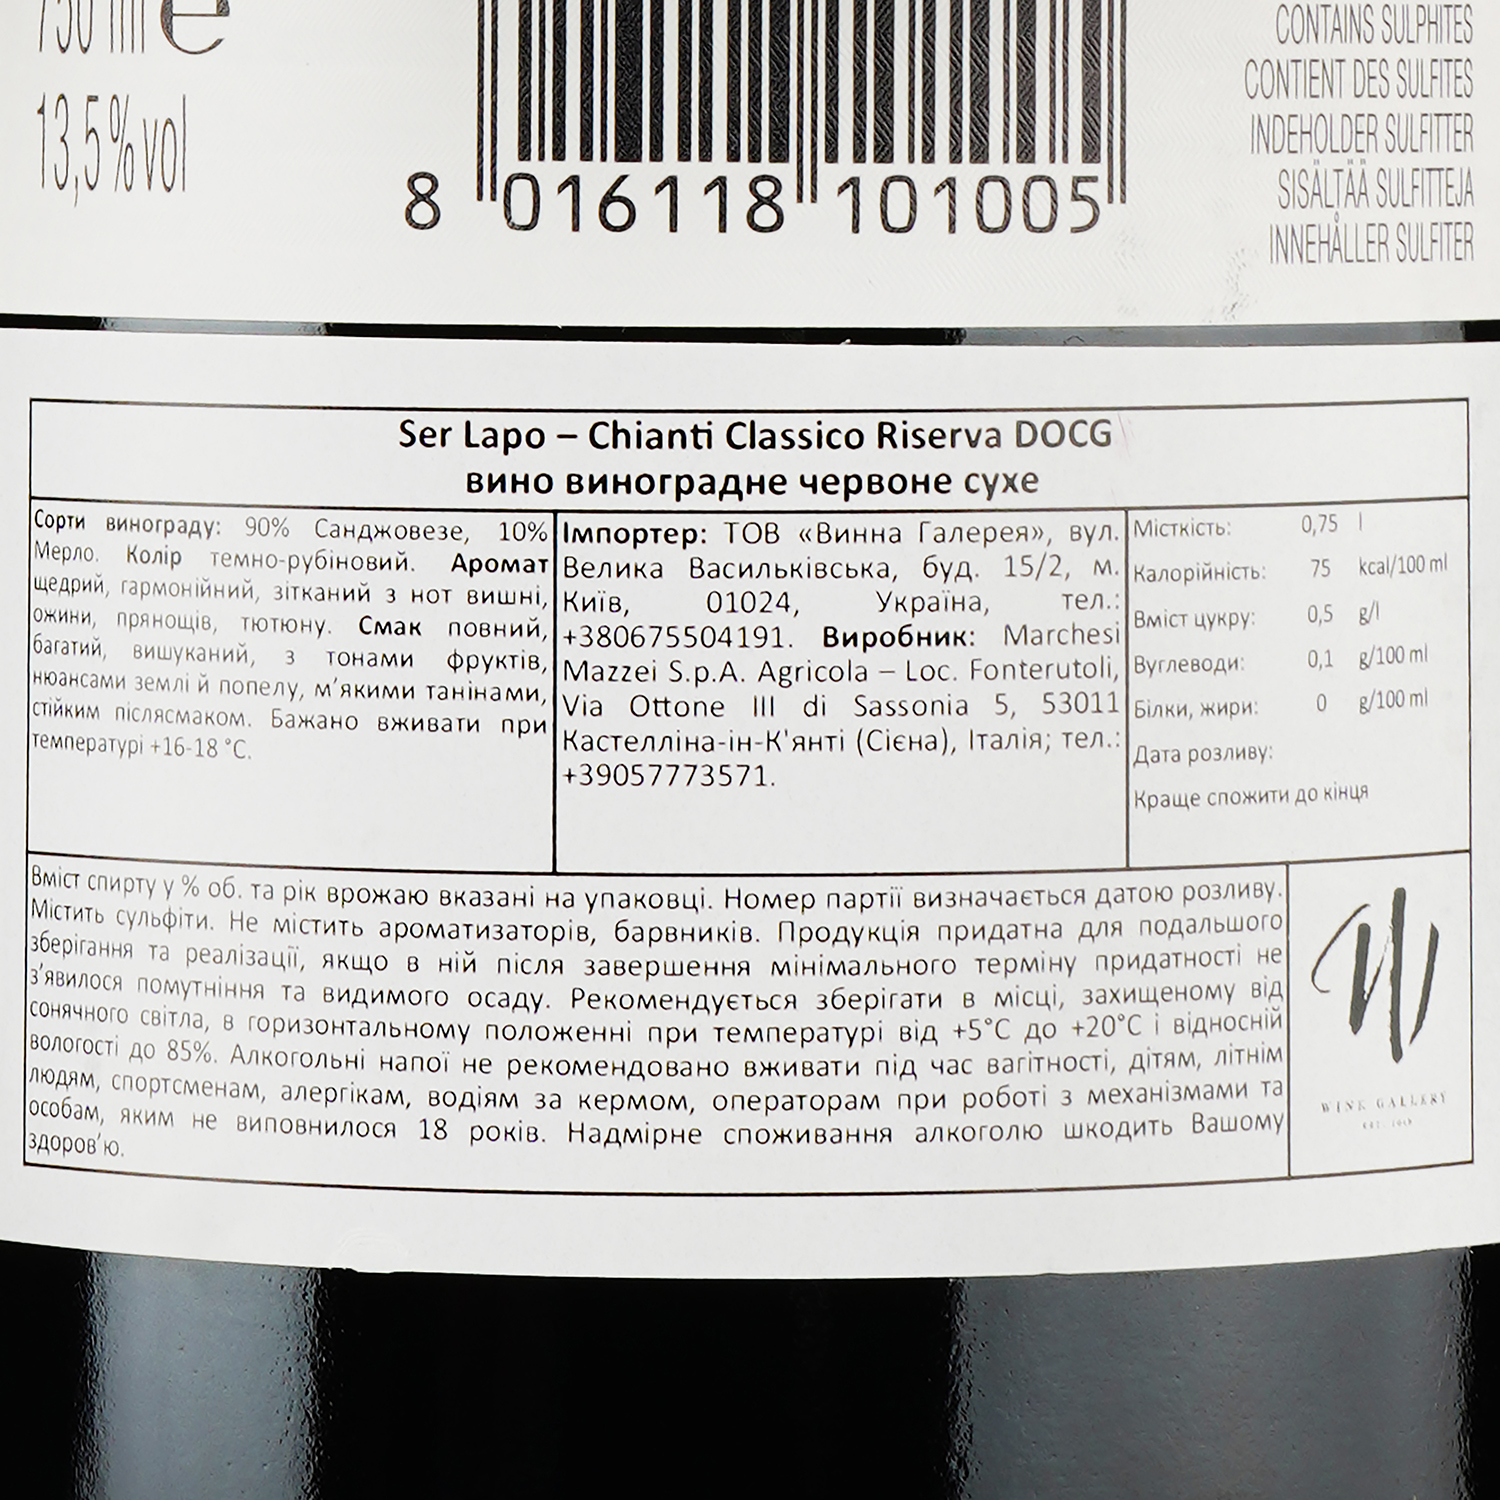 Вино Marchesi Mazzei S.p.A. Ser Lapo – Chianti Classico Riserva DOCG, красное, сухое, 0,75 л - фото 3